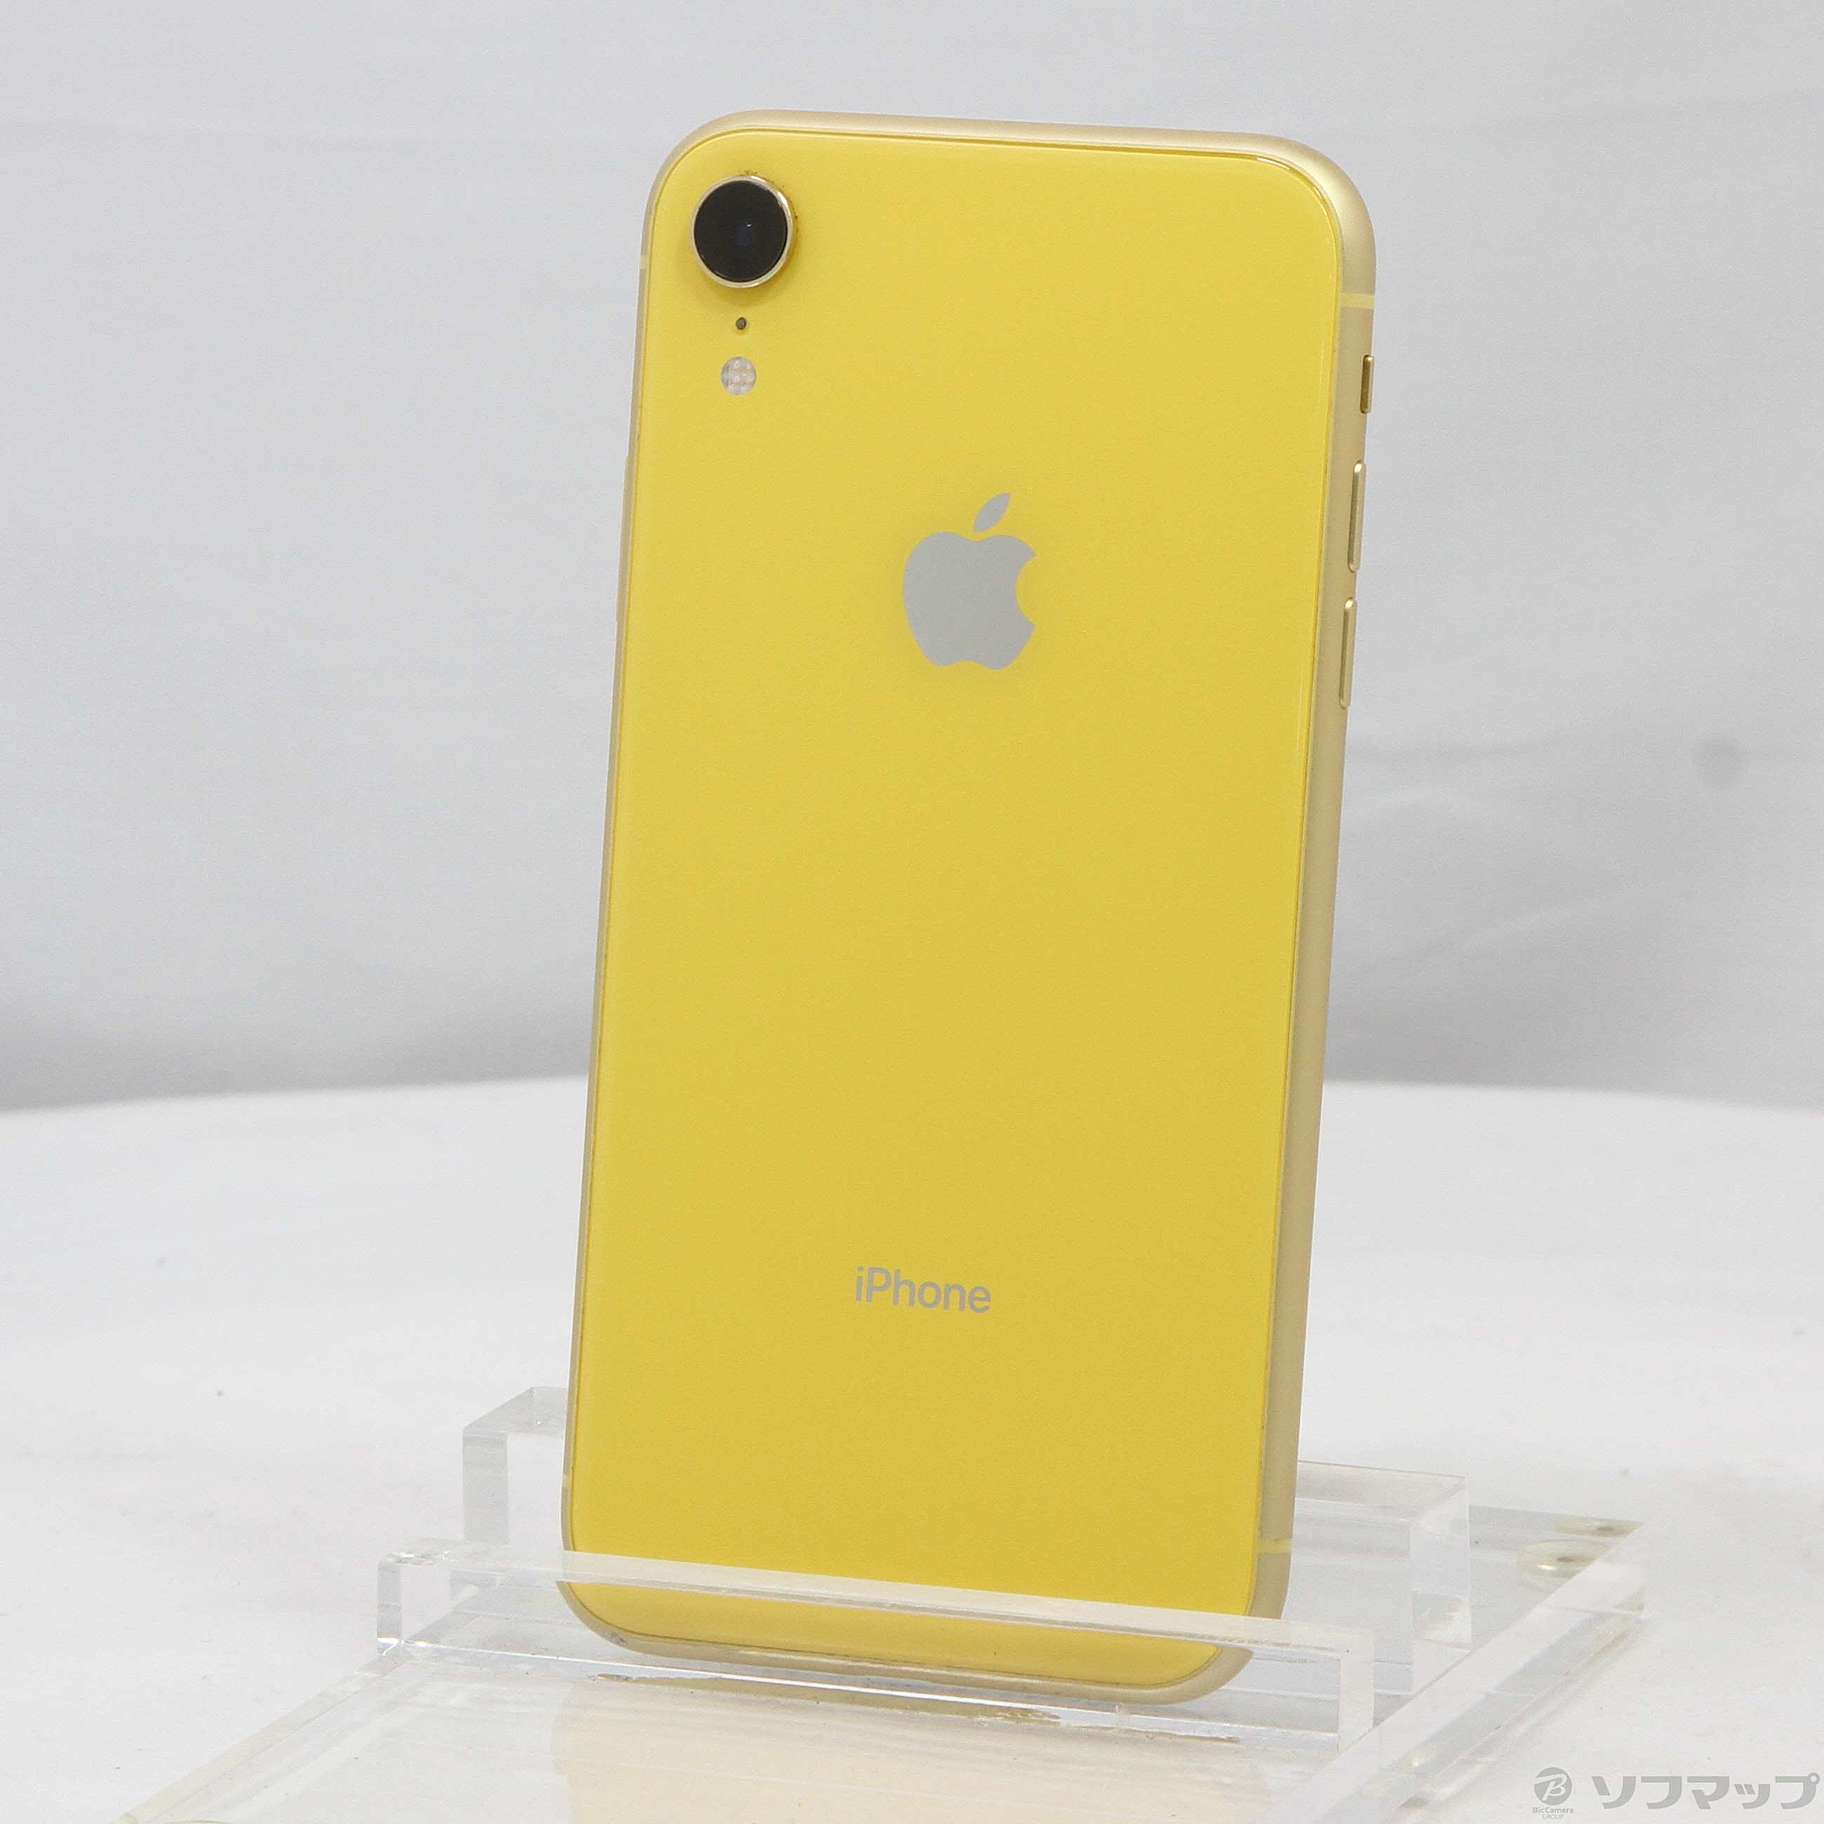 iPhone XR yellow 64GB 新品未開封キャリアau - bridgeacademyoman.com